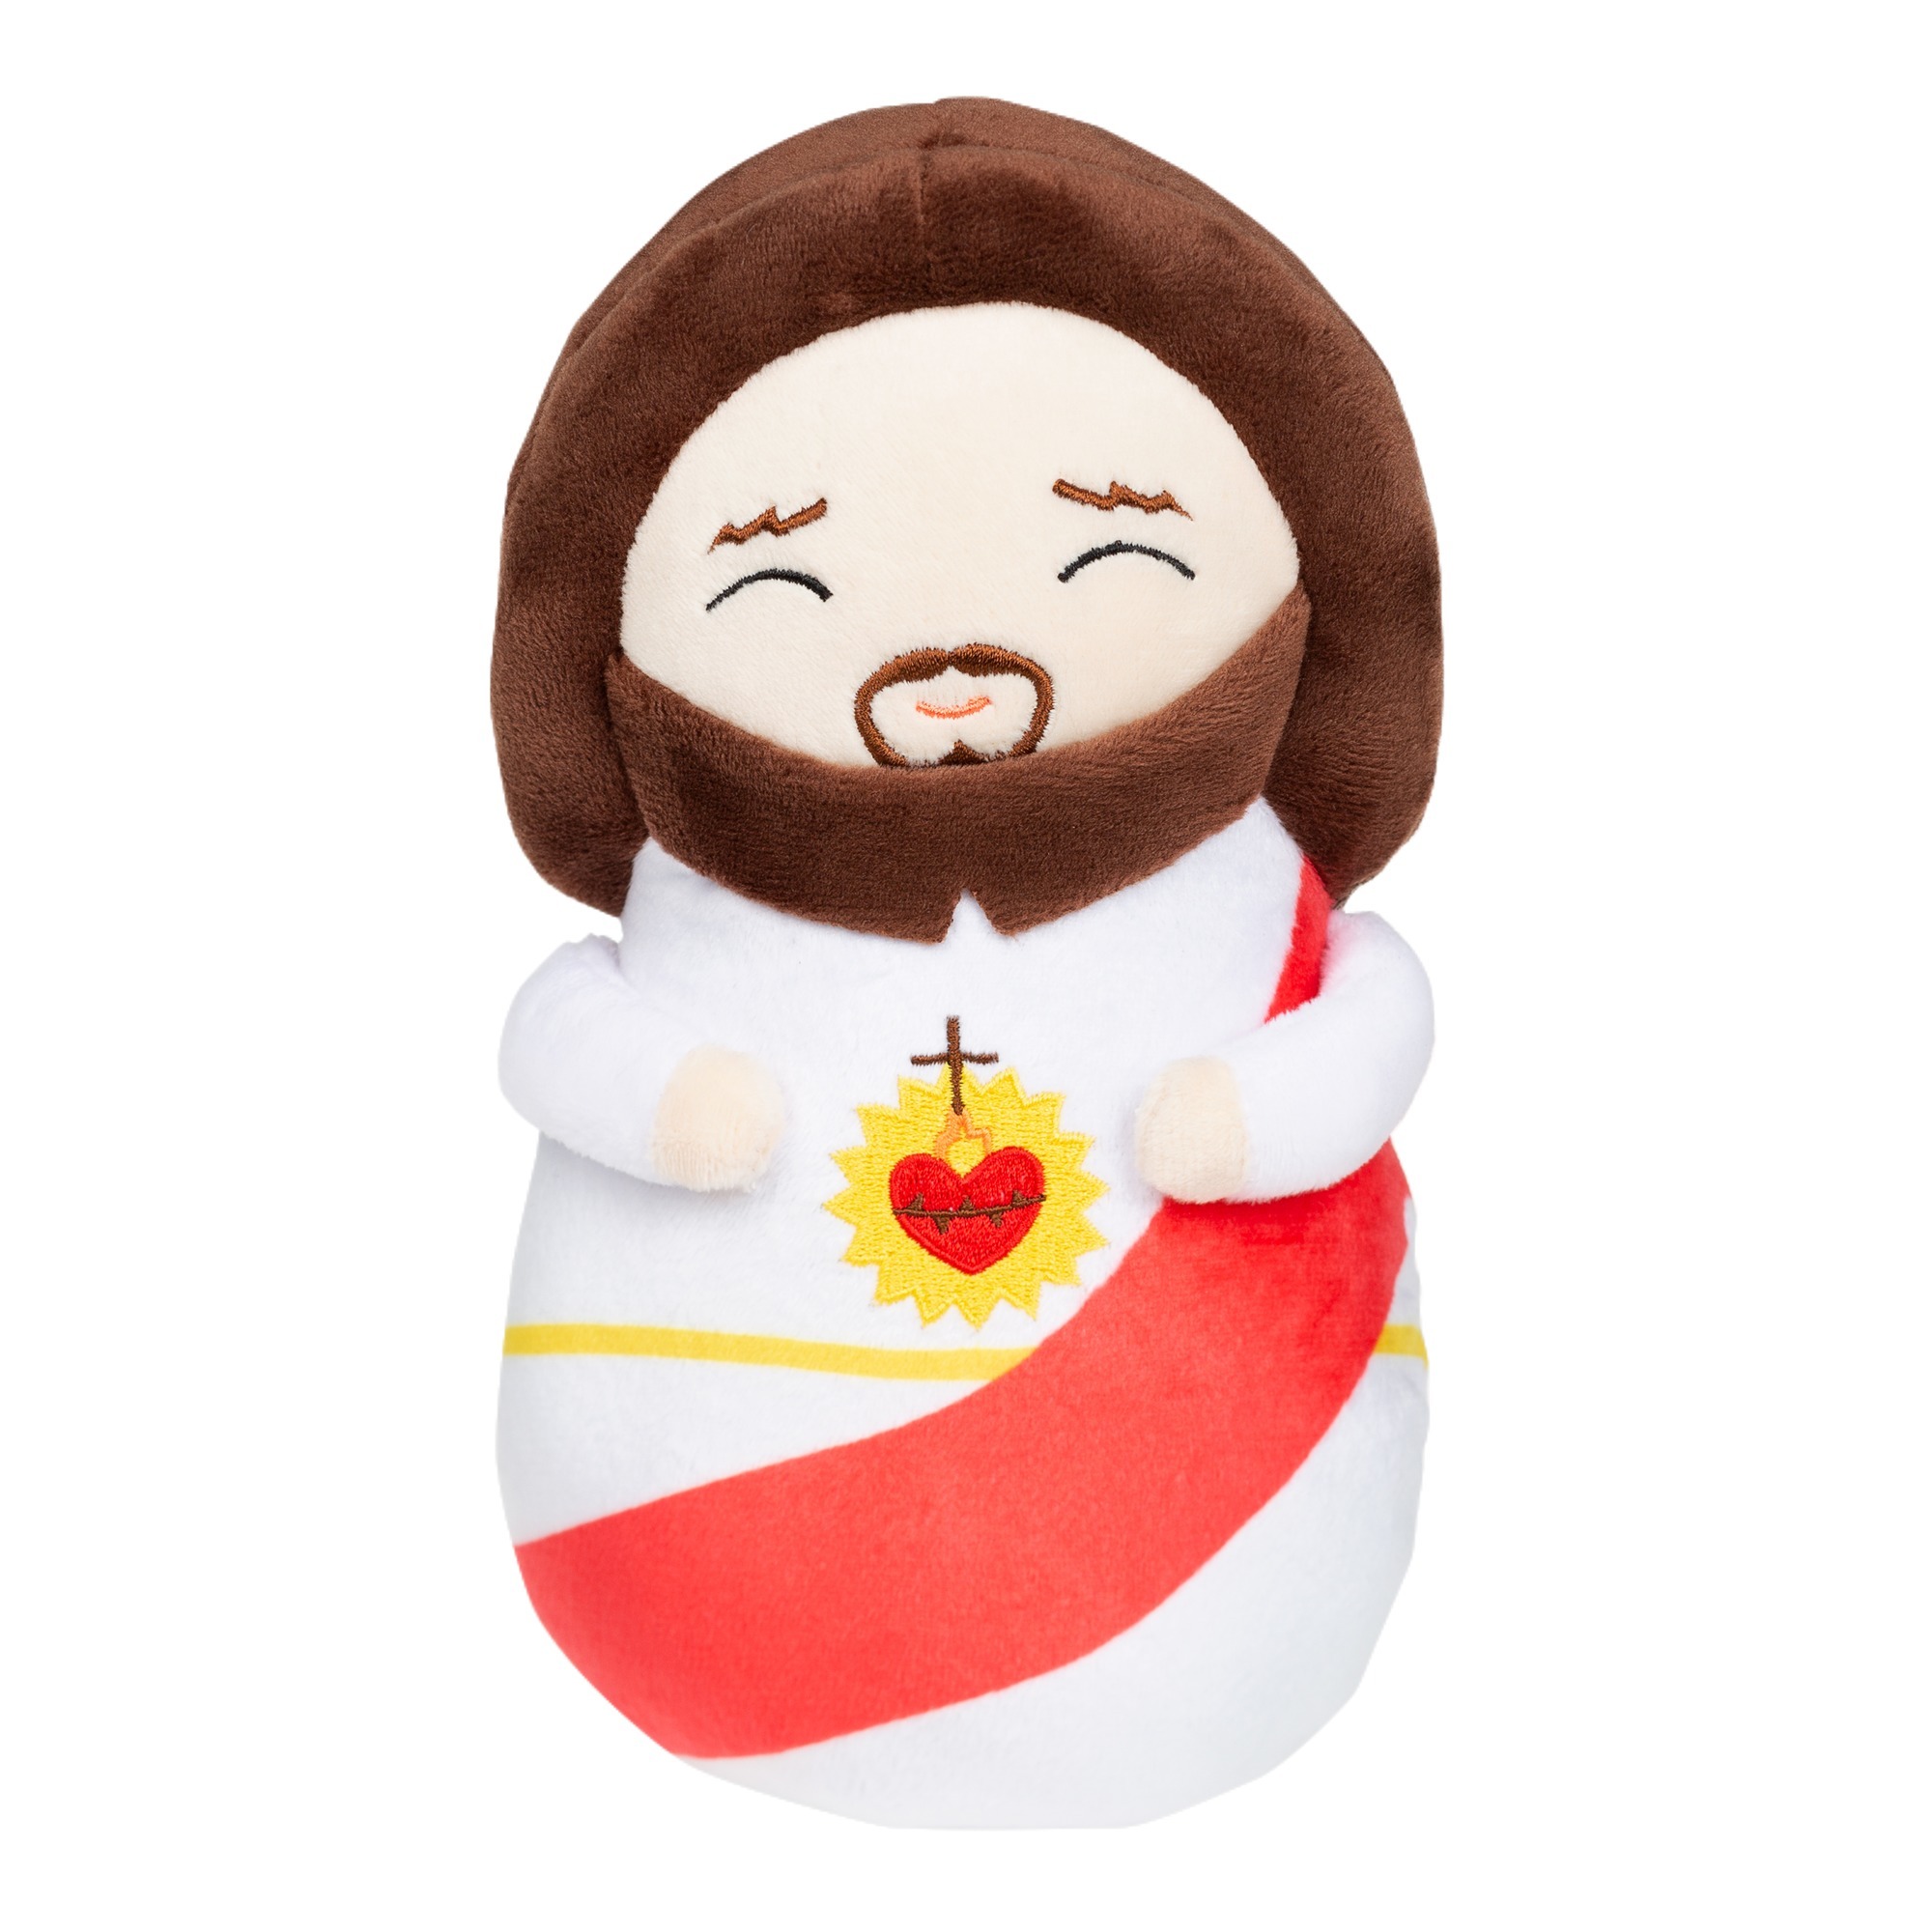 baby jesus stuffed doll